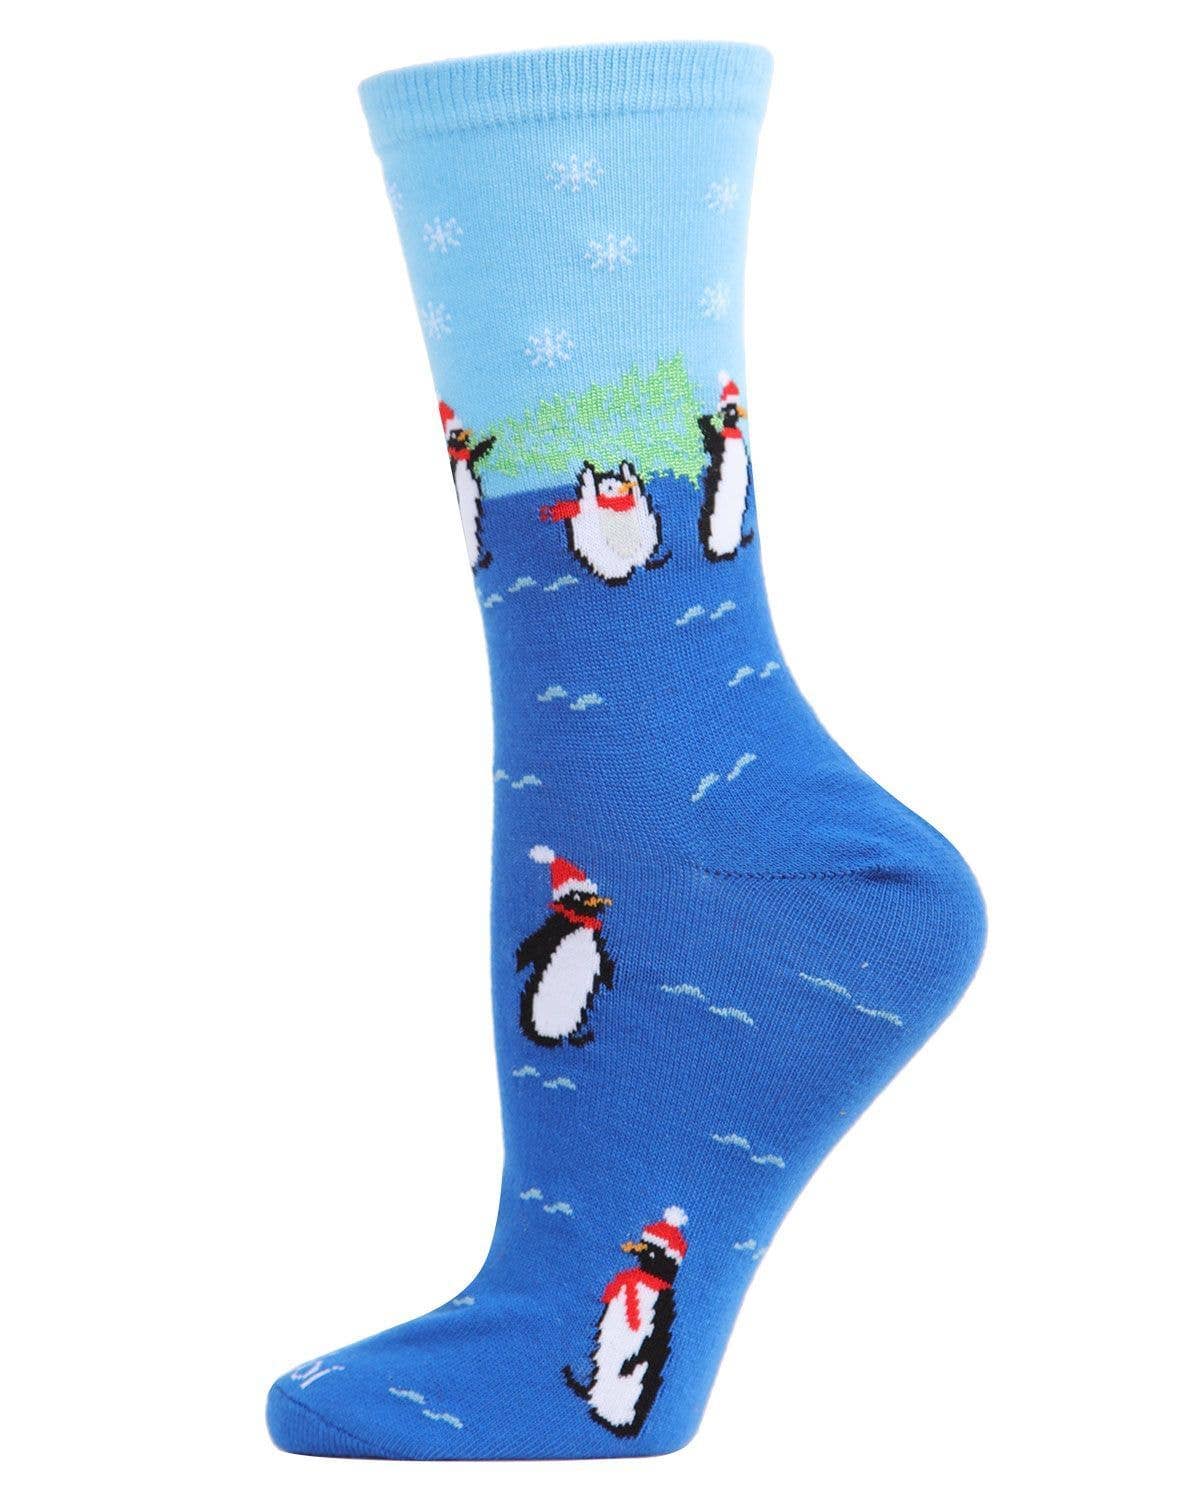 60% OFF Penguins Holiday Crew Socks